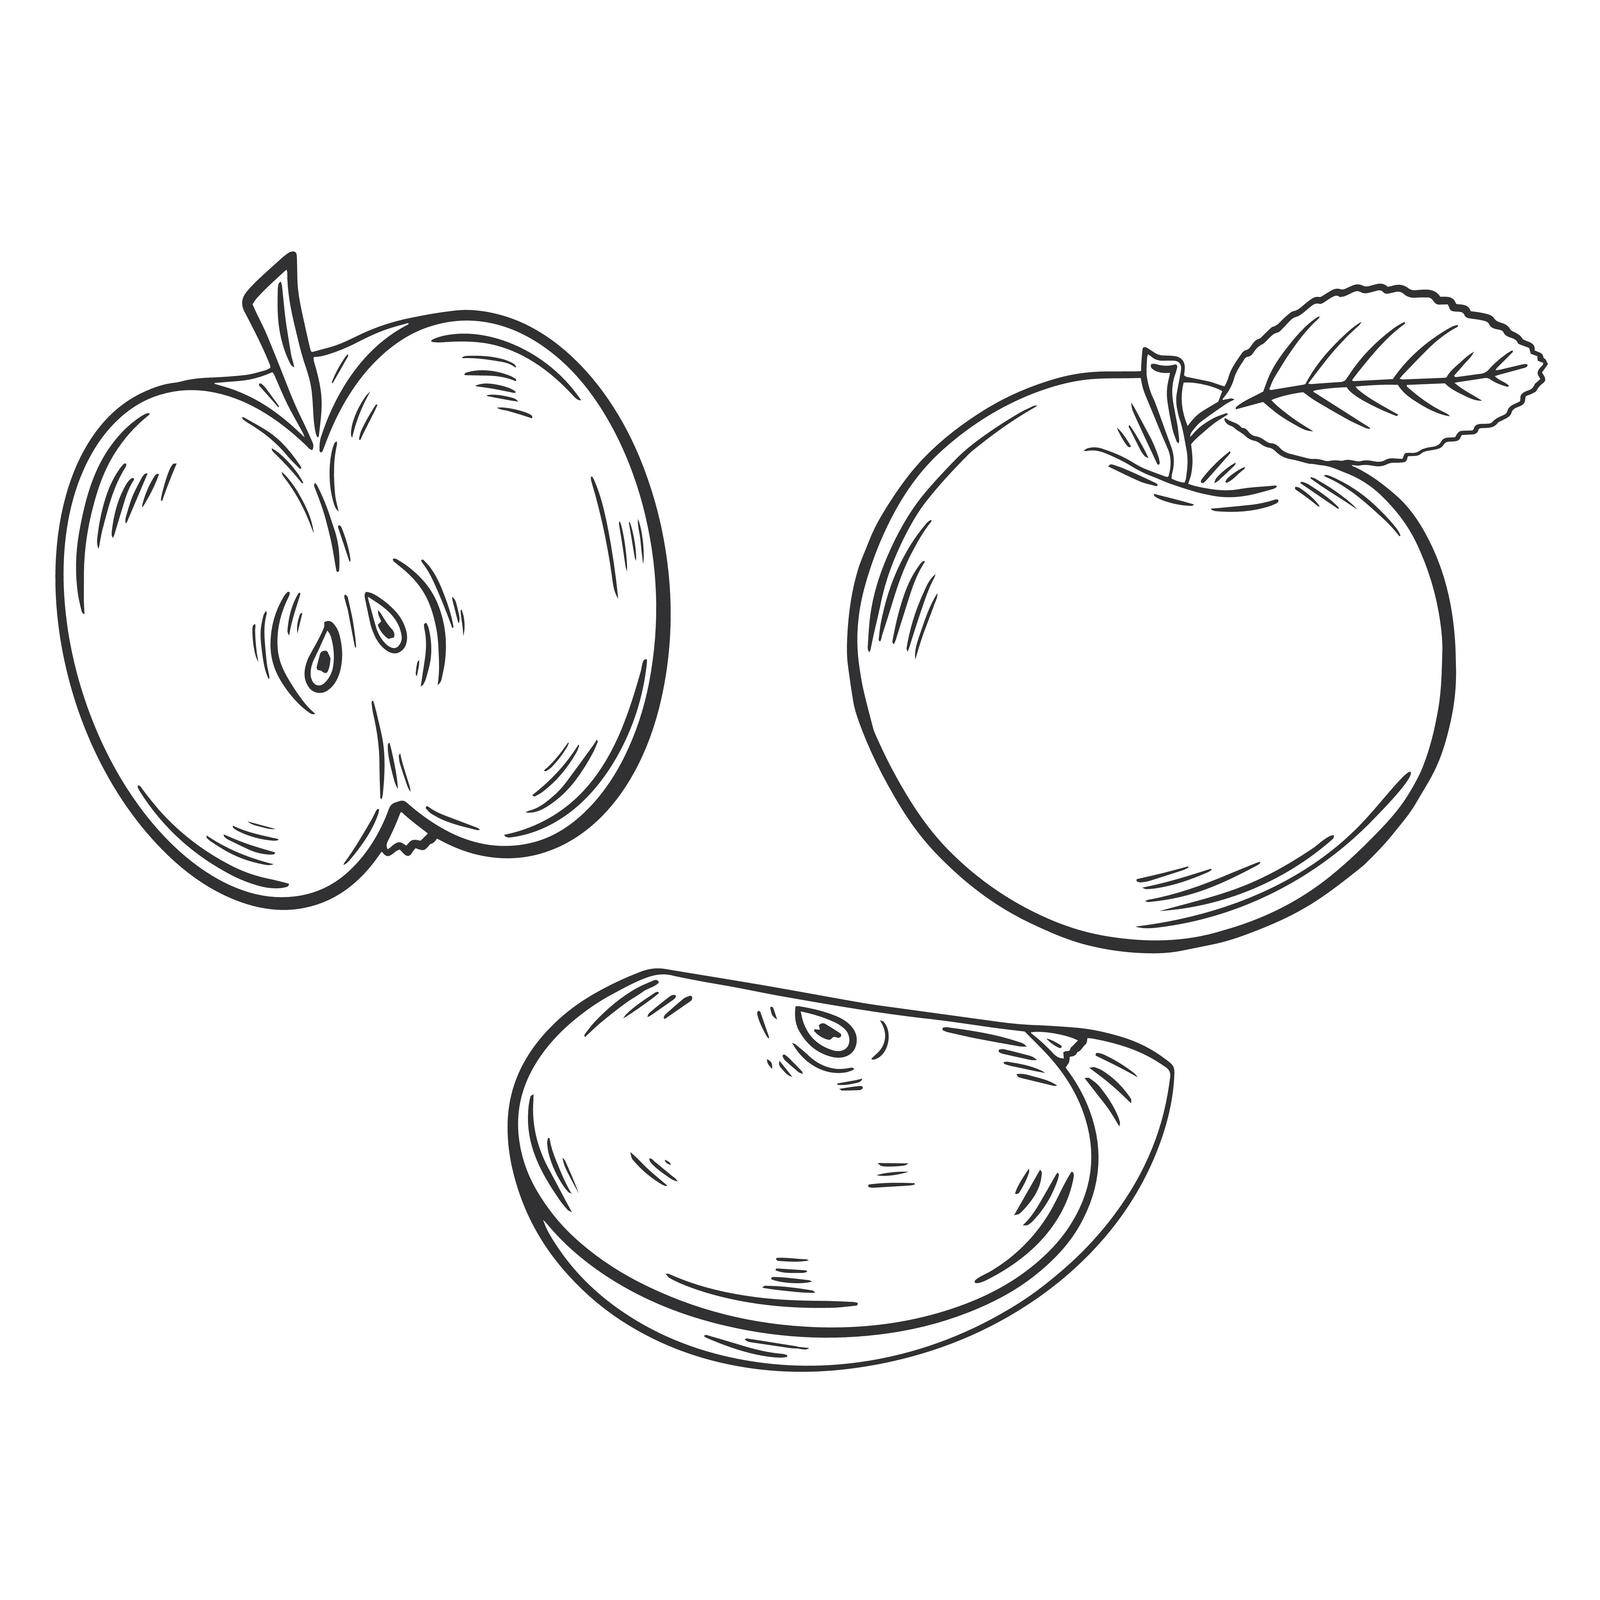 Apples set engraved vector illustration by TassiaK